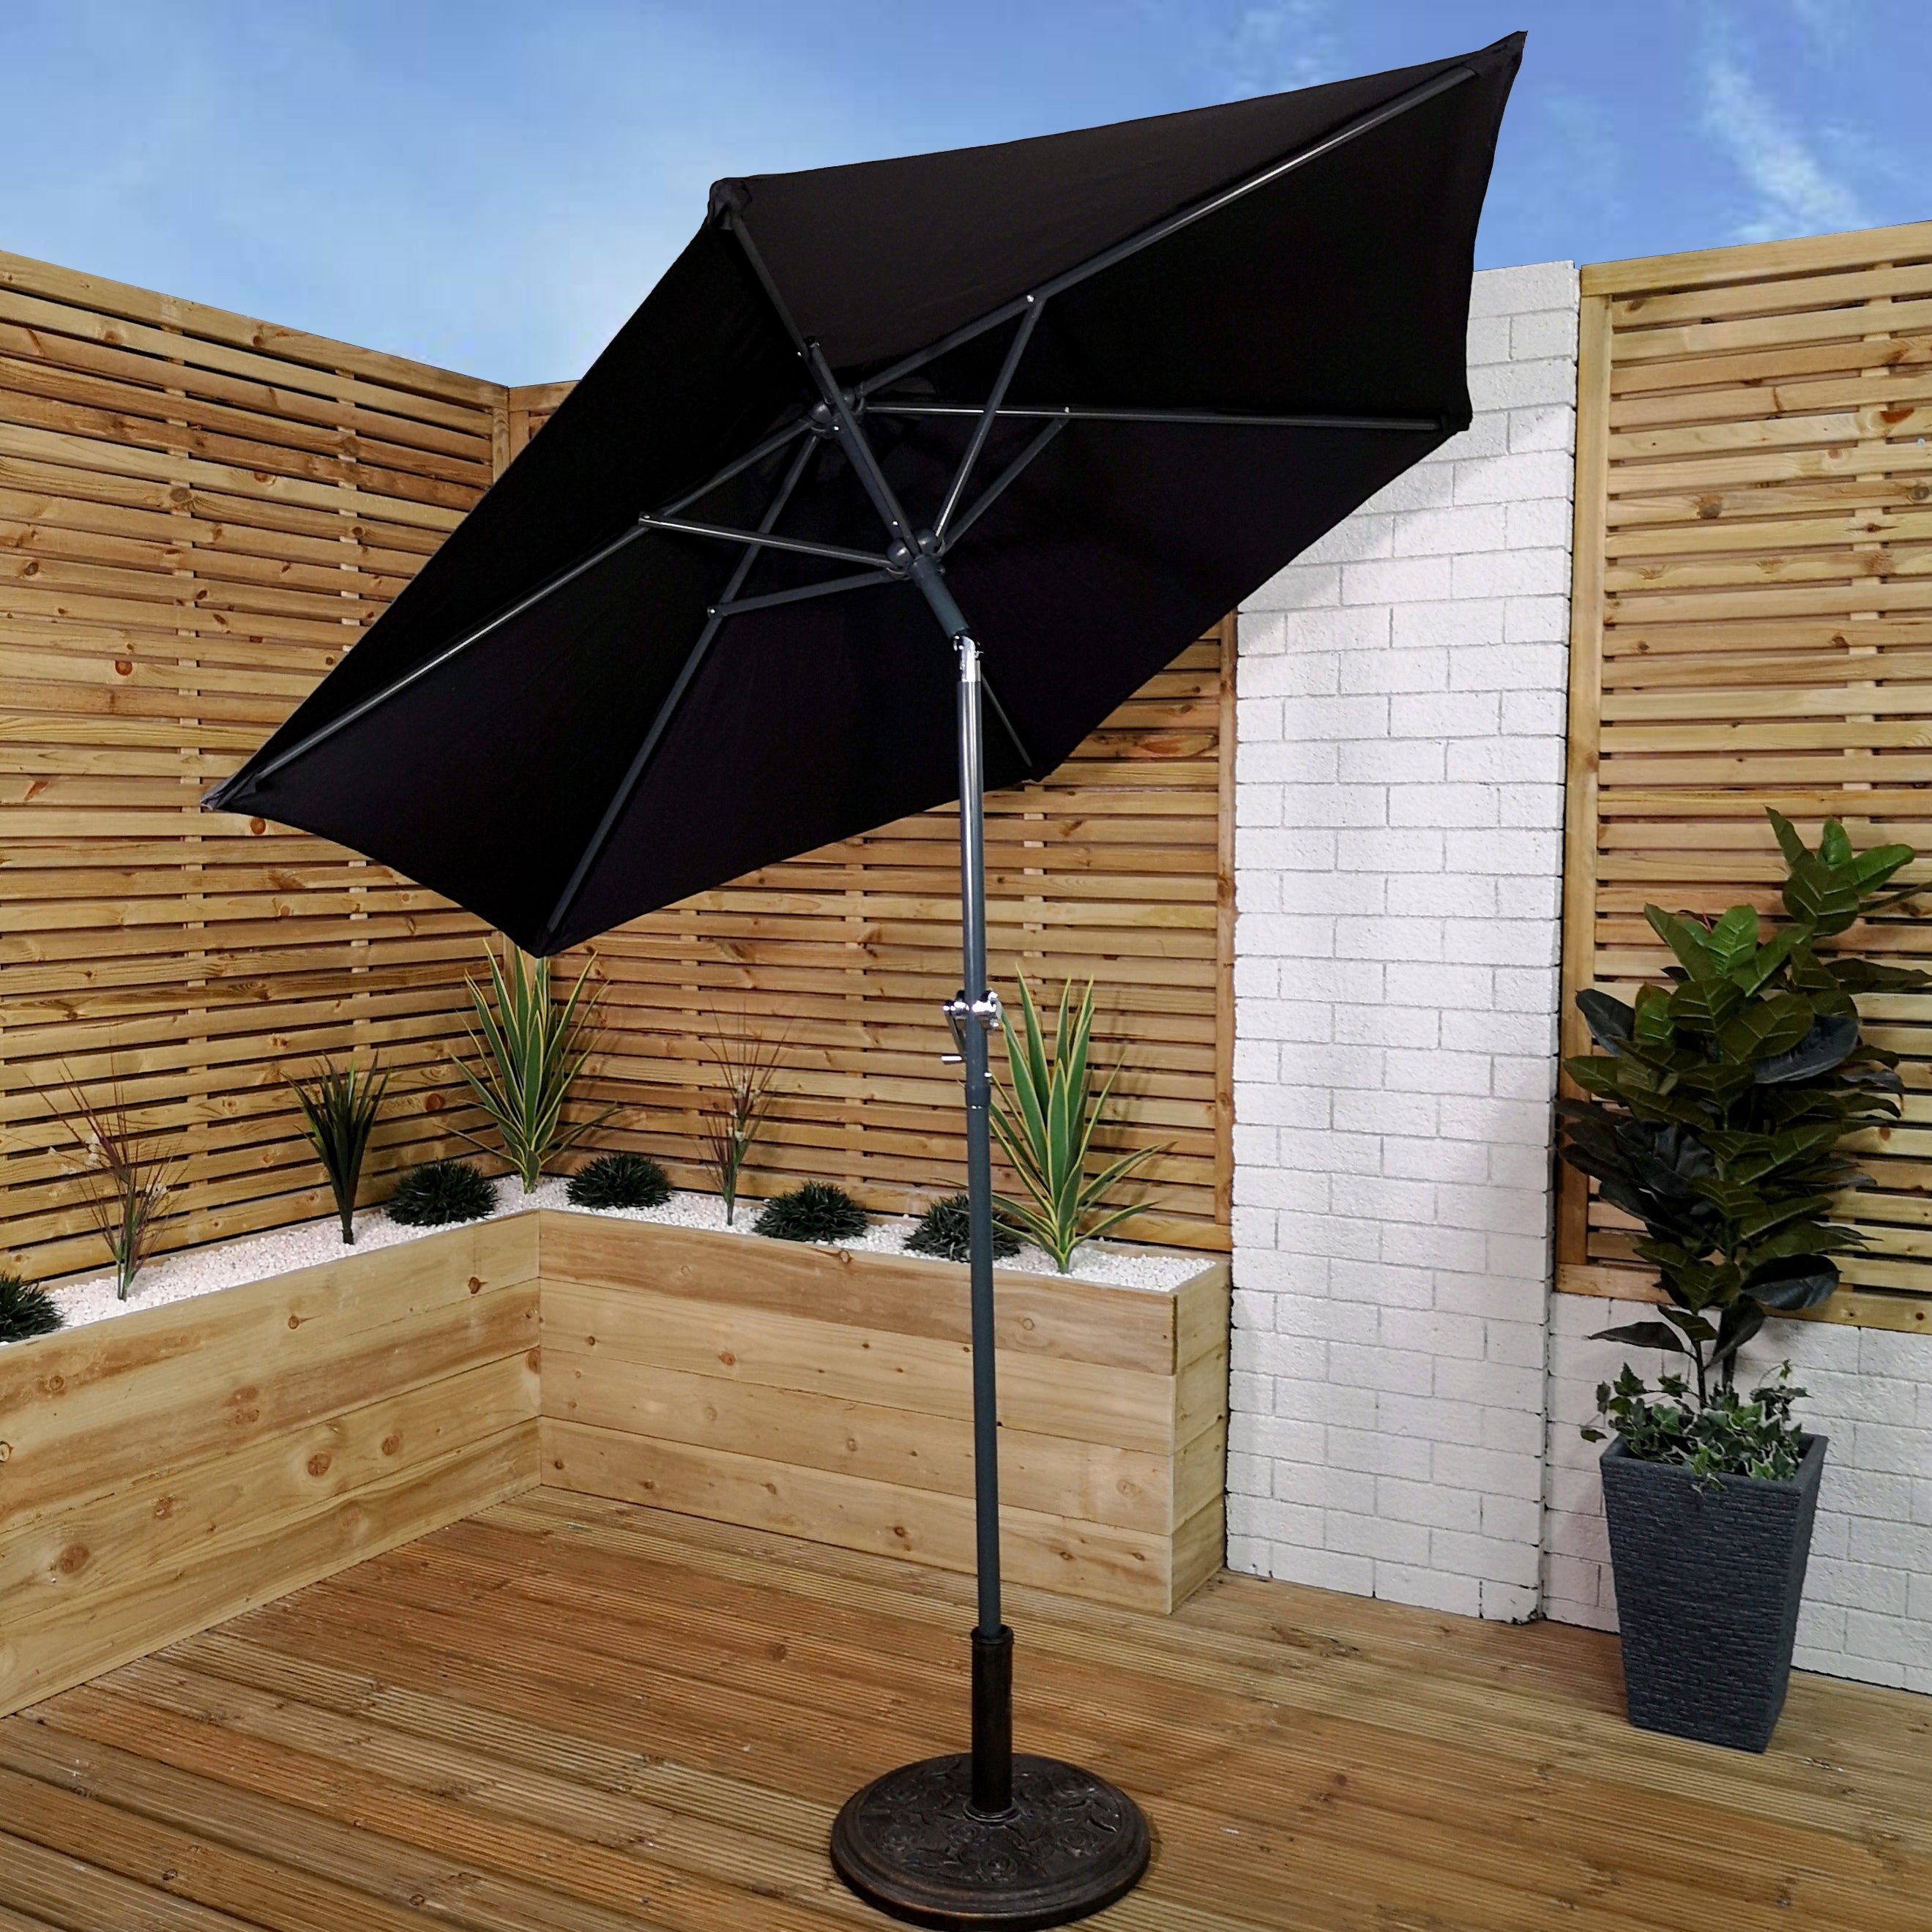 2m Aluminium Garden Patio Sun Shade Parasol with Tilt and Crank in Black